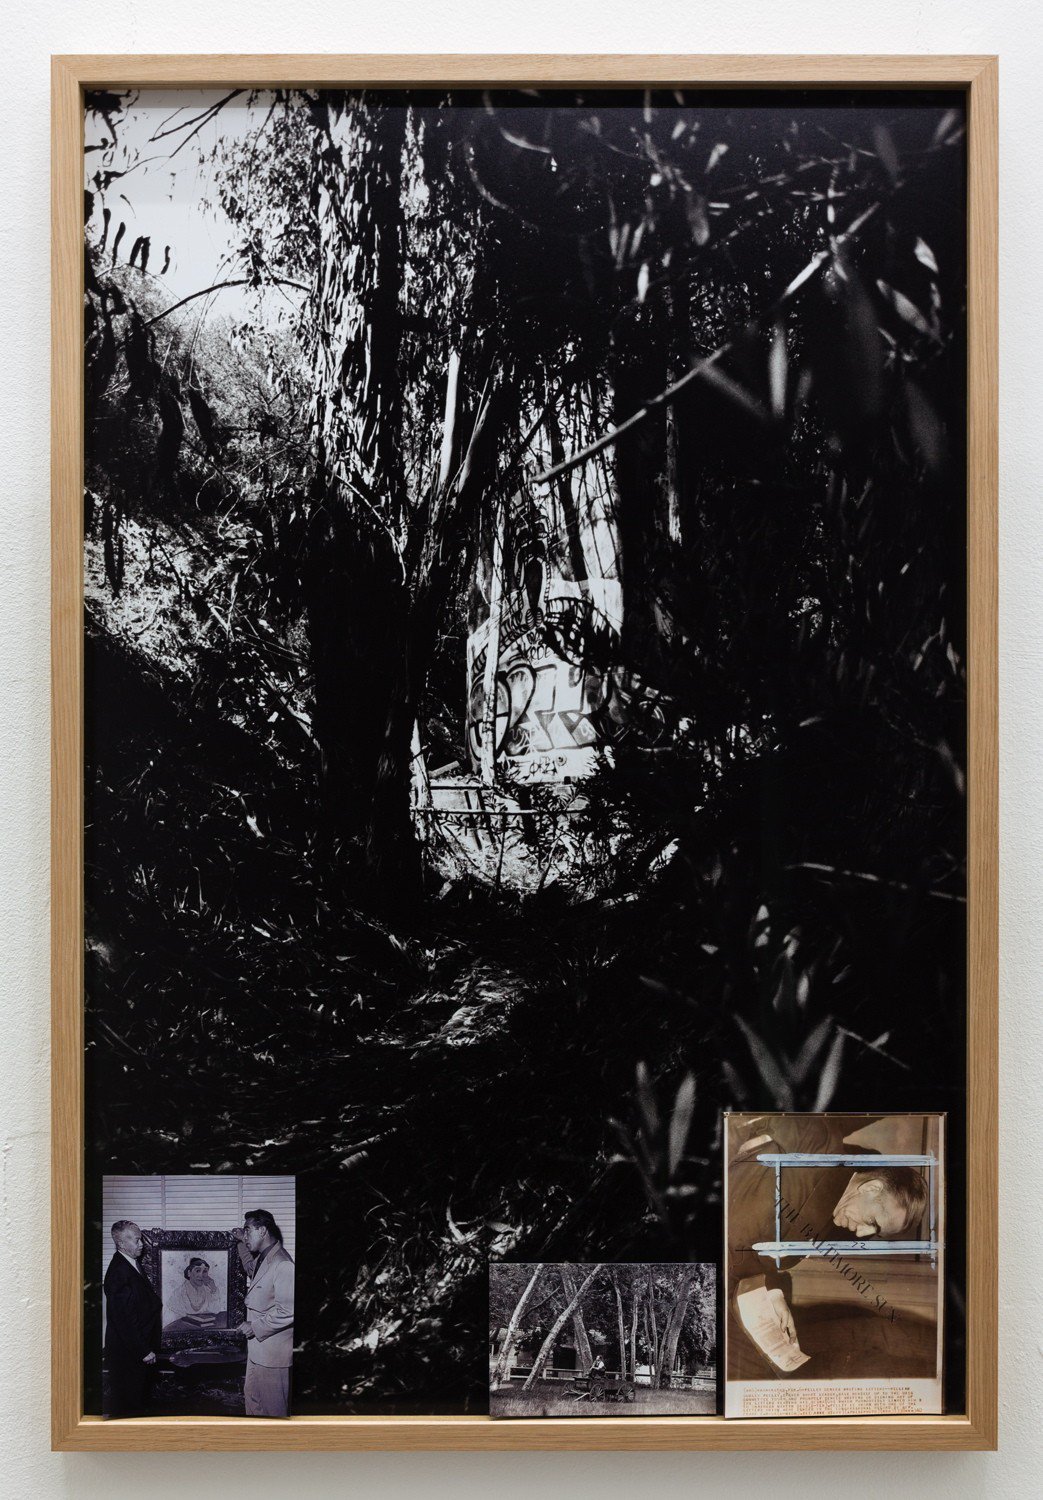 Marius EnghSignature, 2013Analog photograph, collage90 x 60 cm